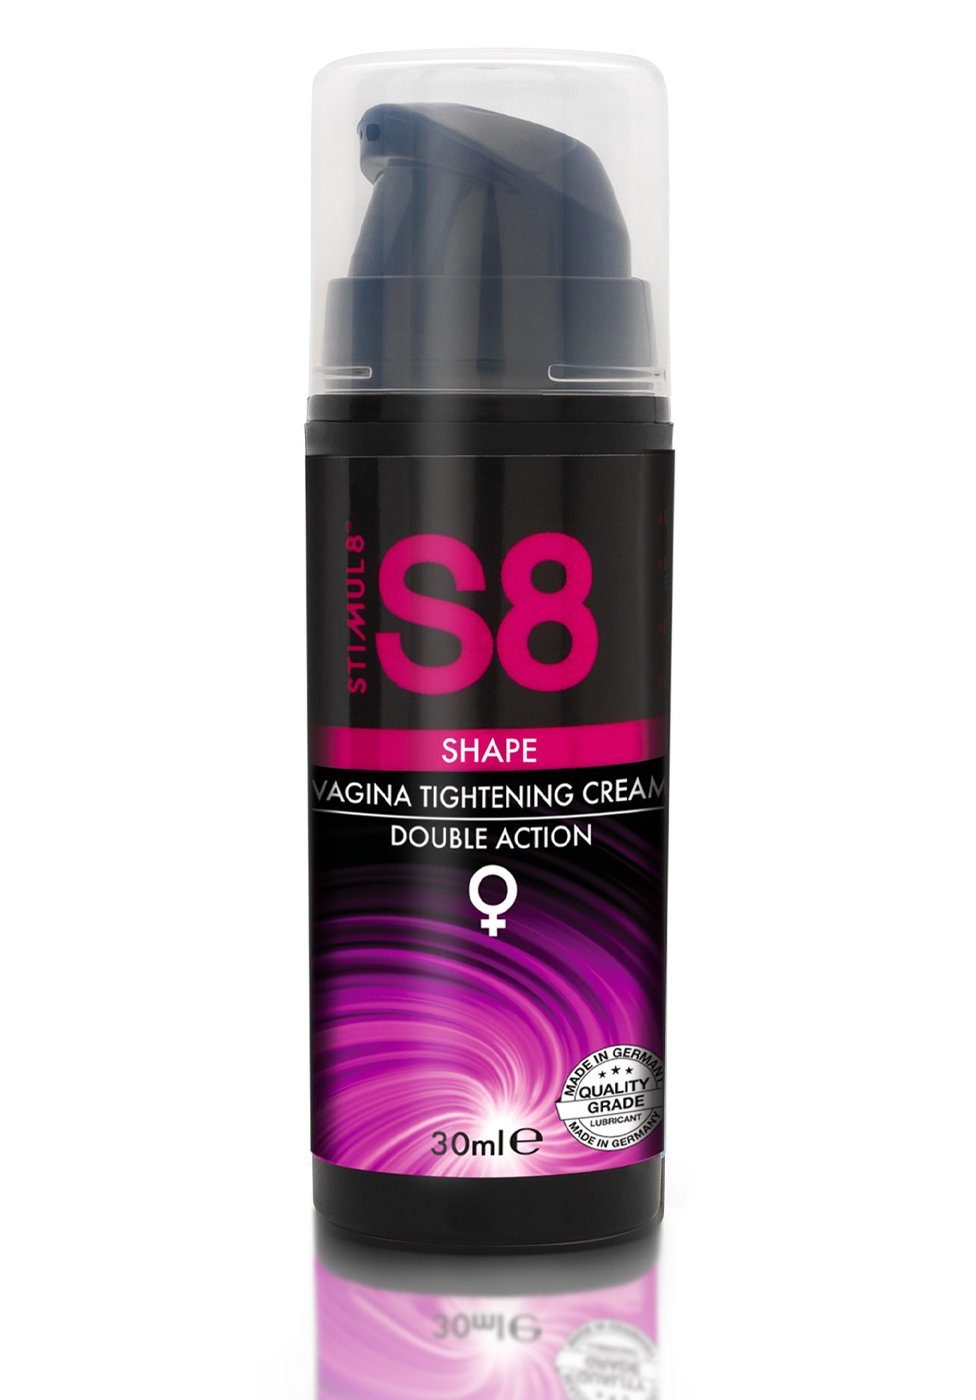 Tightening Vagina Creme Stimulationsgel S8 Shape Stimul8 30 ml -